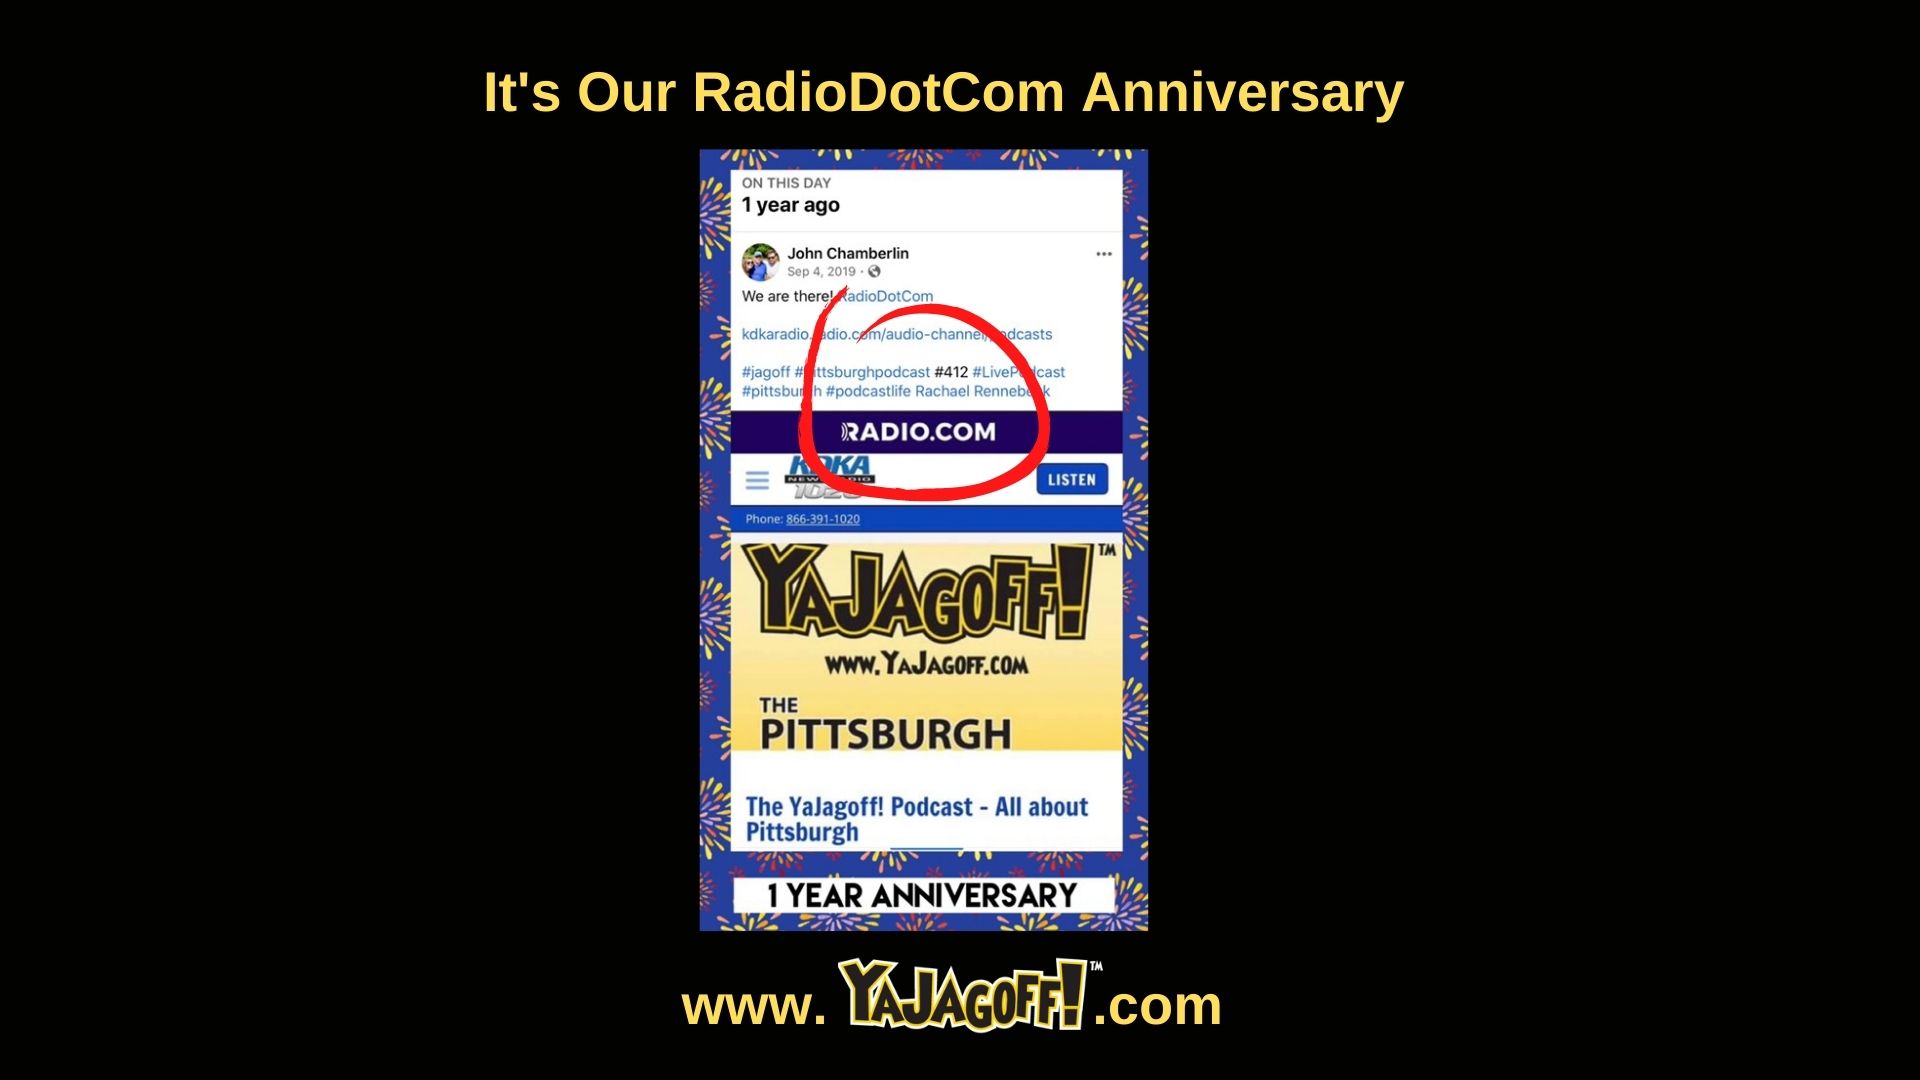 YaJAgoff Podcast Anniversary on RadioDotCom